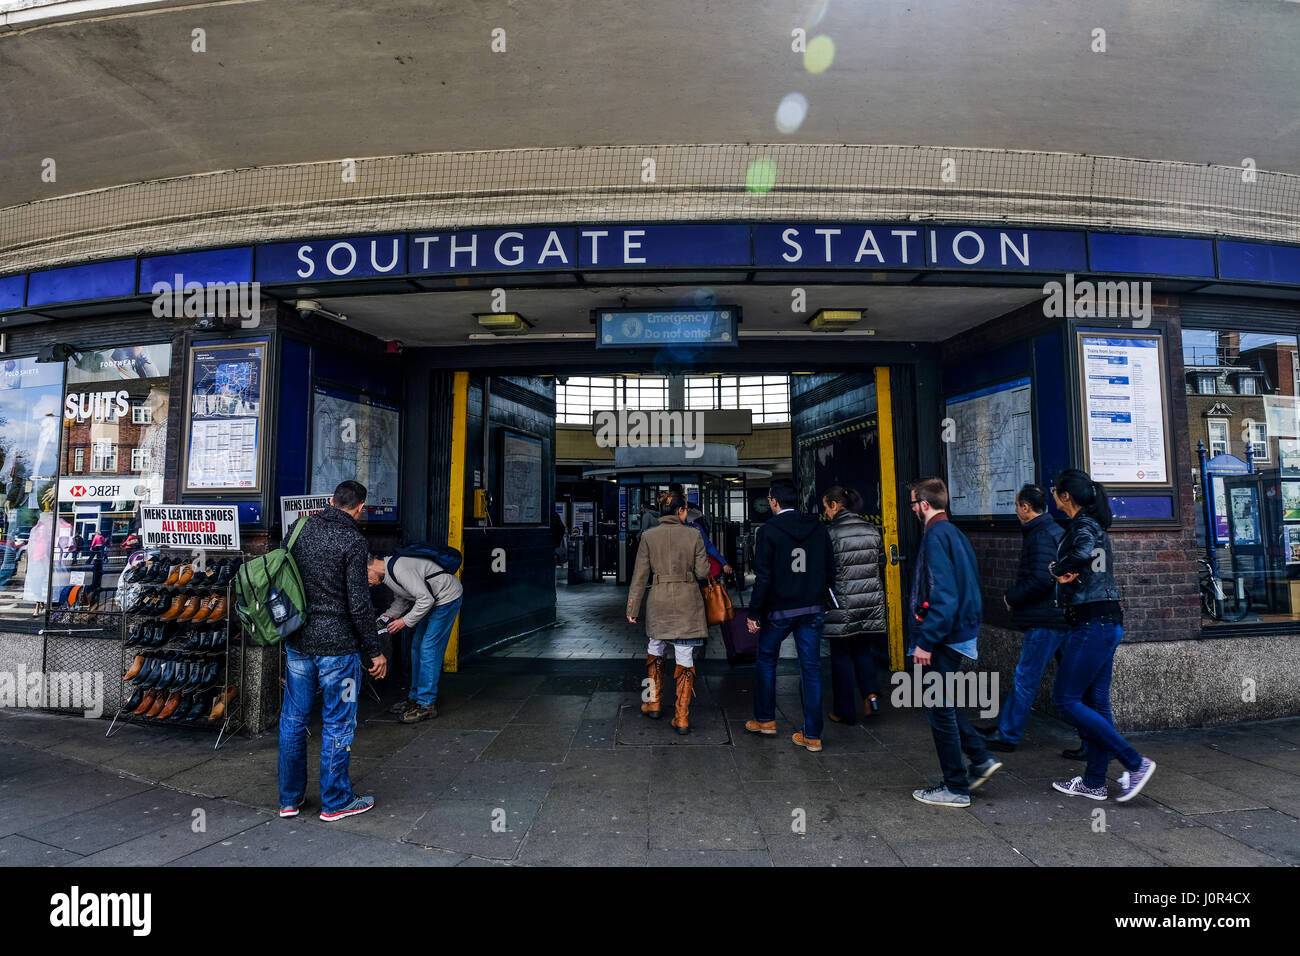 Southgate Station Stock Photo